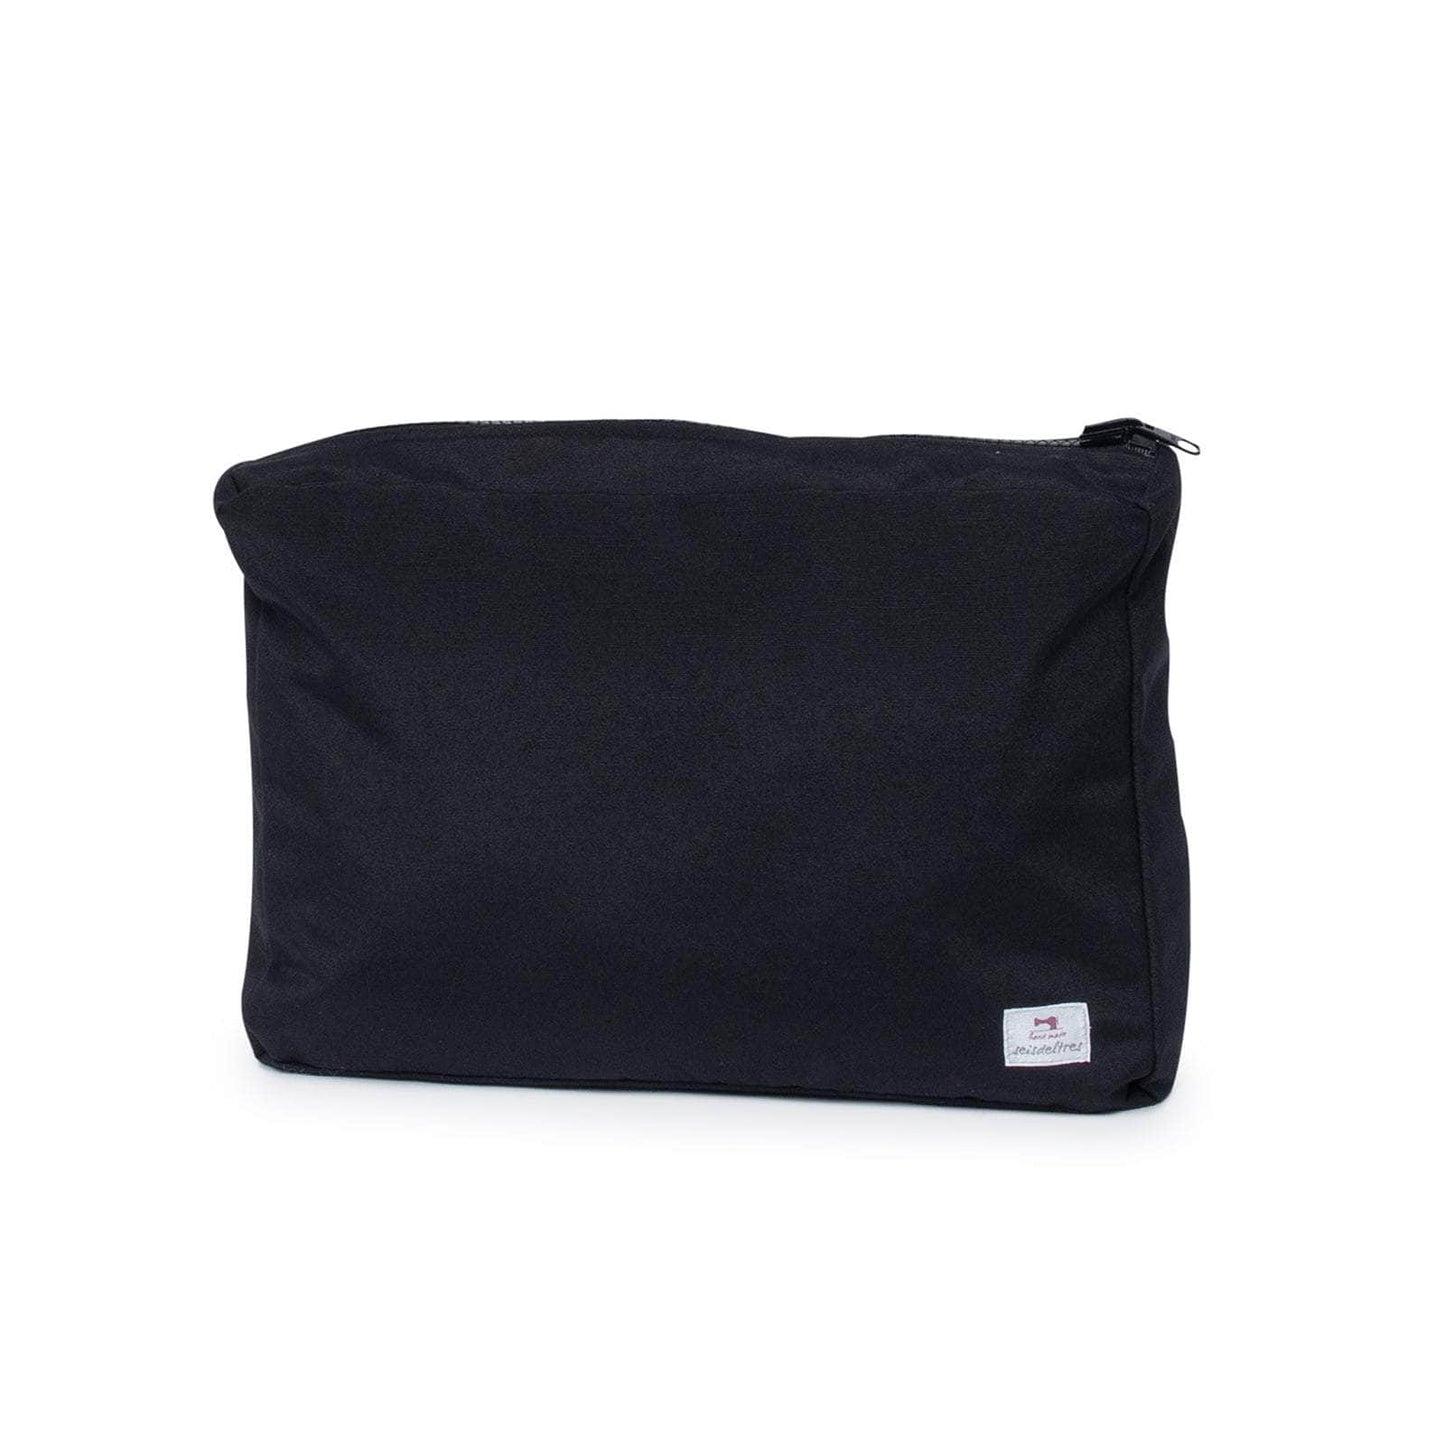 pack mybigbag Pack completo - bolsa L, bolsa XL y neceser - Cuadros Vichy con asas y cremallera negras